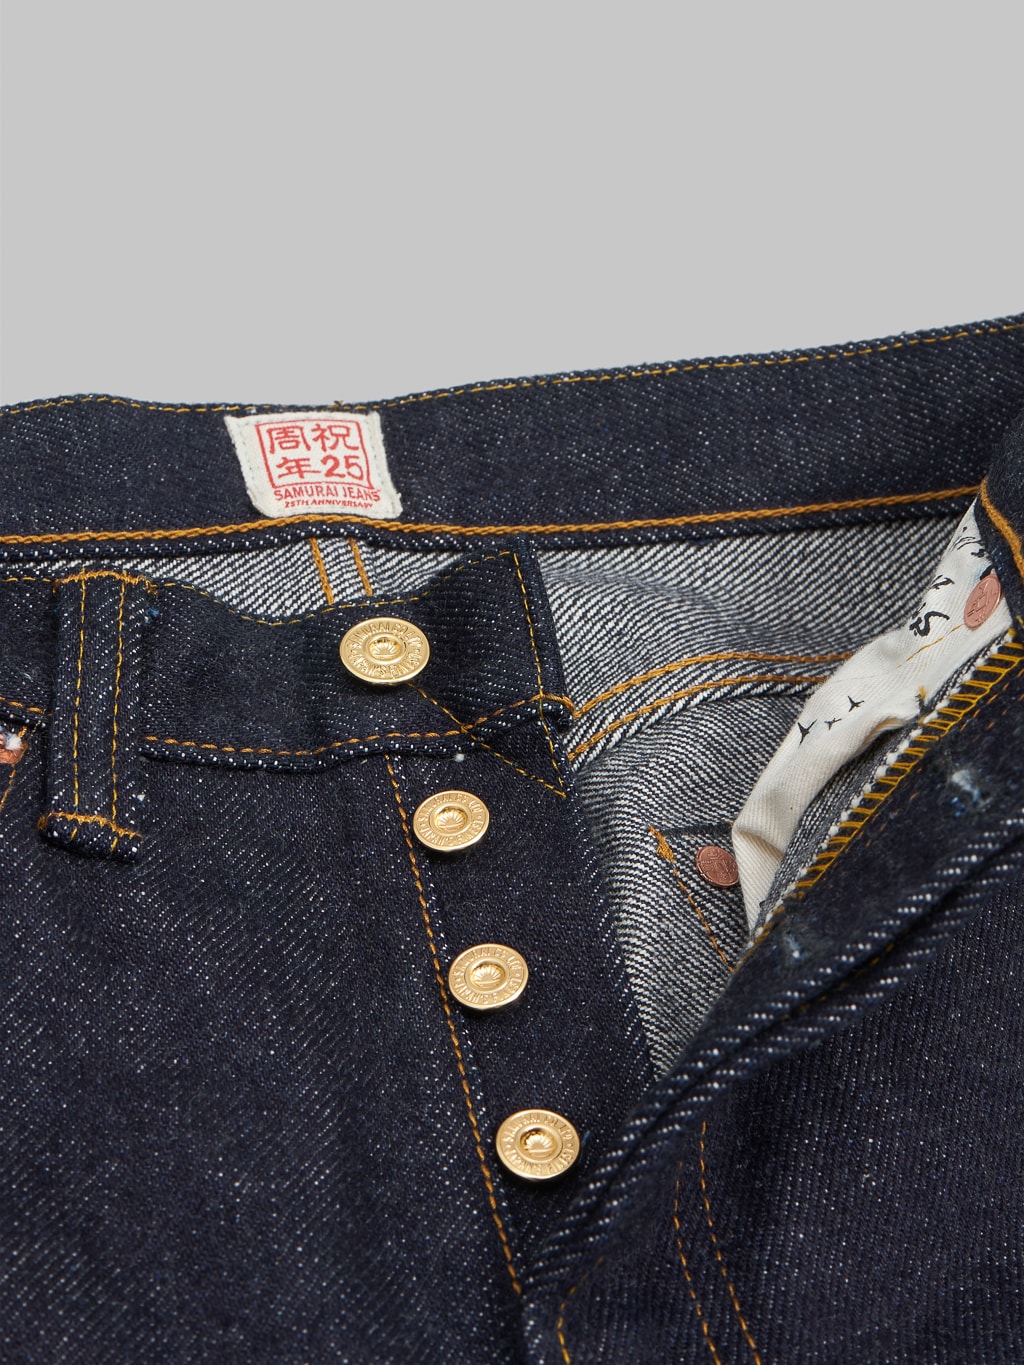 samurai jeans s710xx 25oz 25th anniversary selvedge jeans gold iron buttons